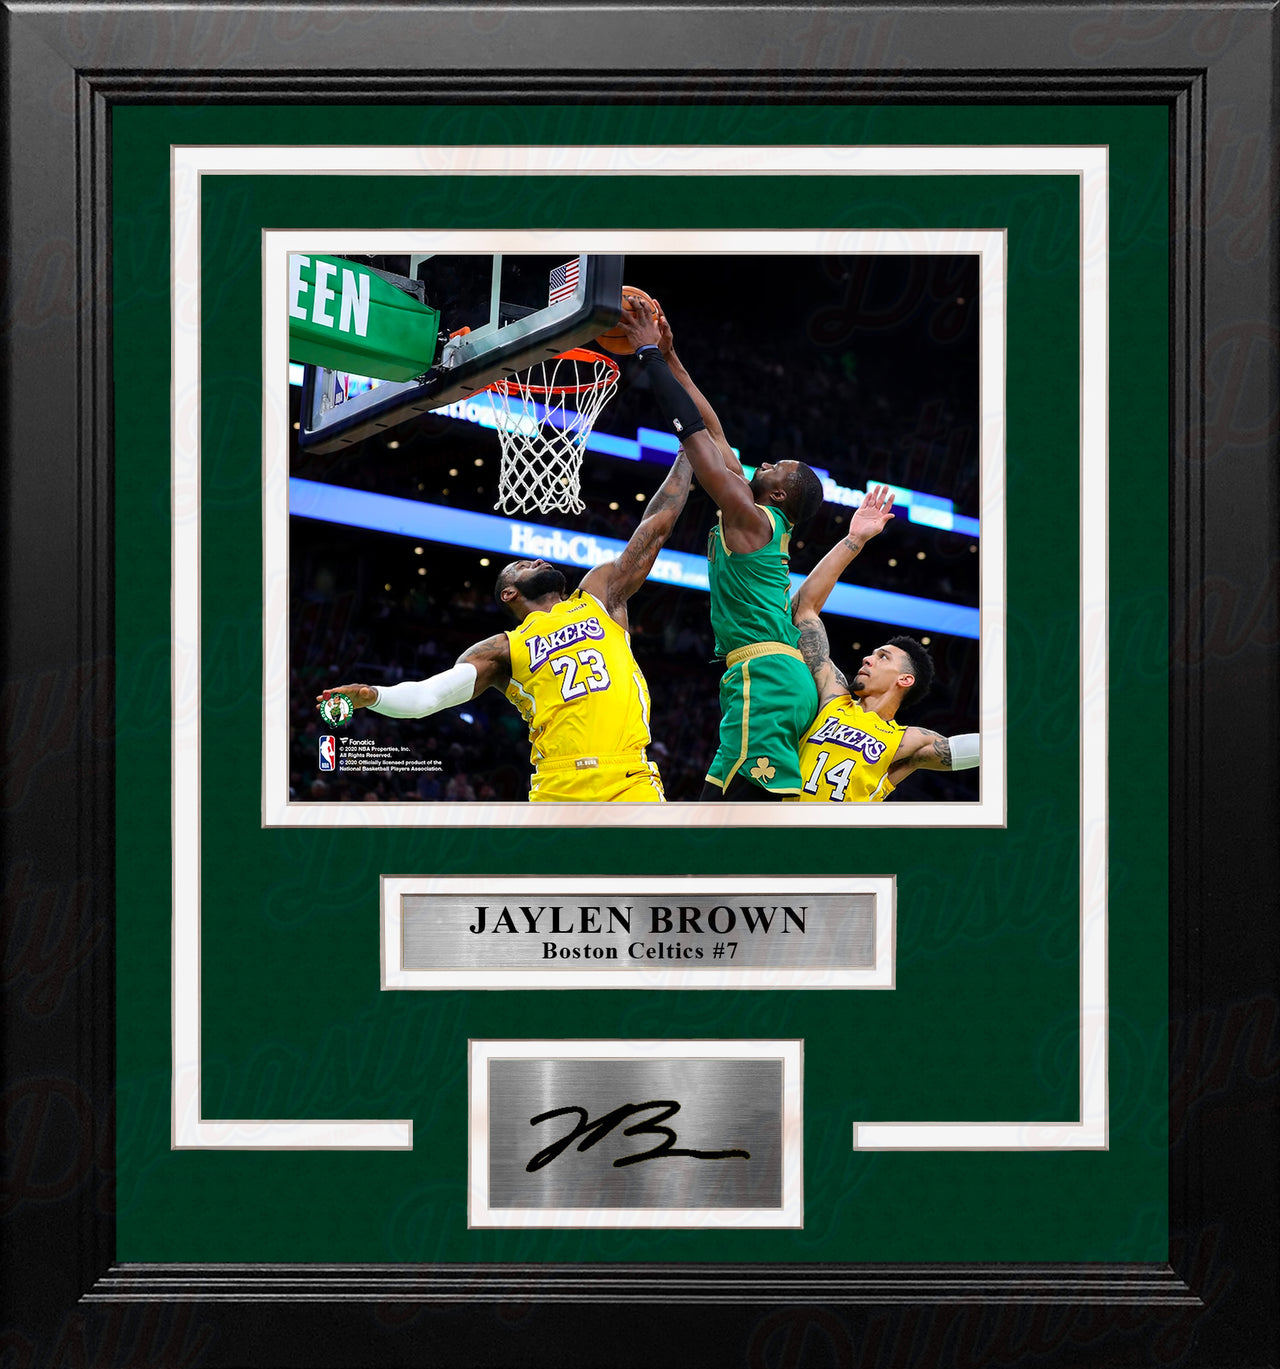 Jaylen Brown Dunks Over LeBron Boston Celtics 8x10 Framed Basketball Photo with Engraved Autograph - Dynasty Sports & Framing 